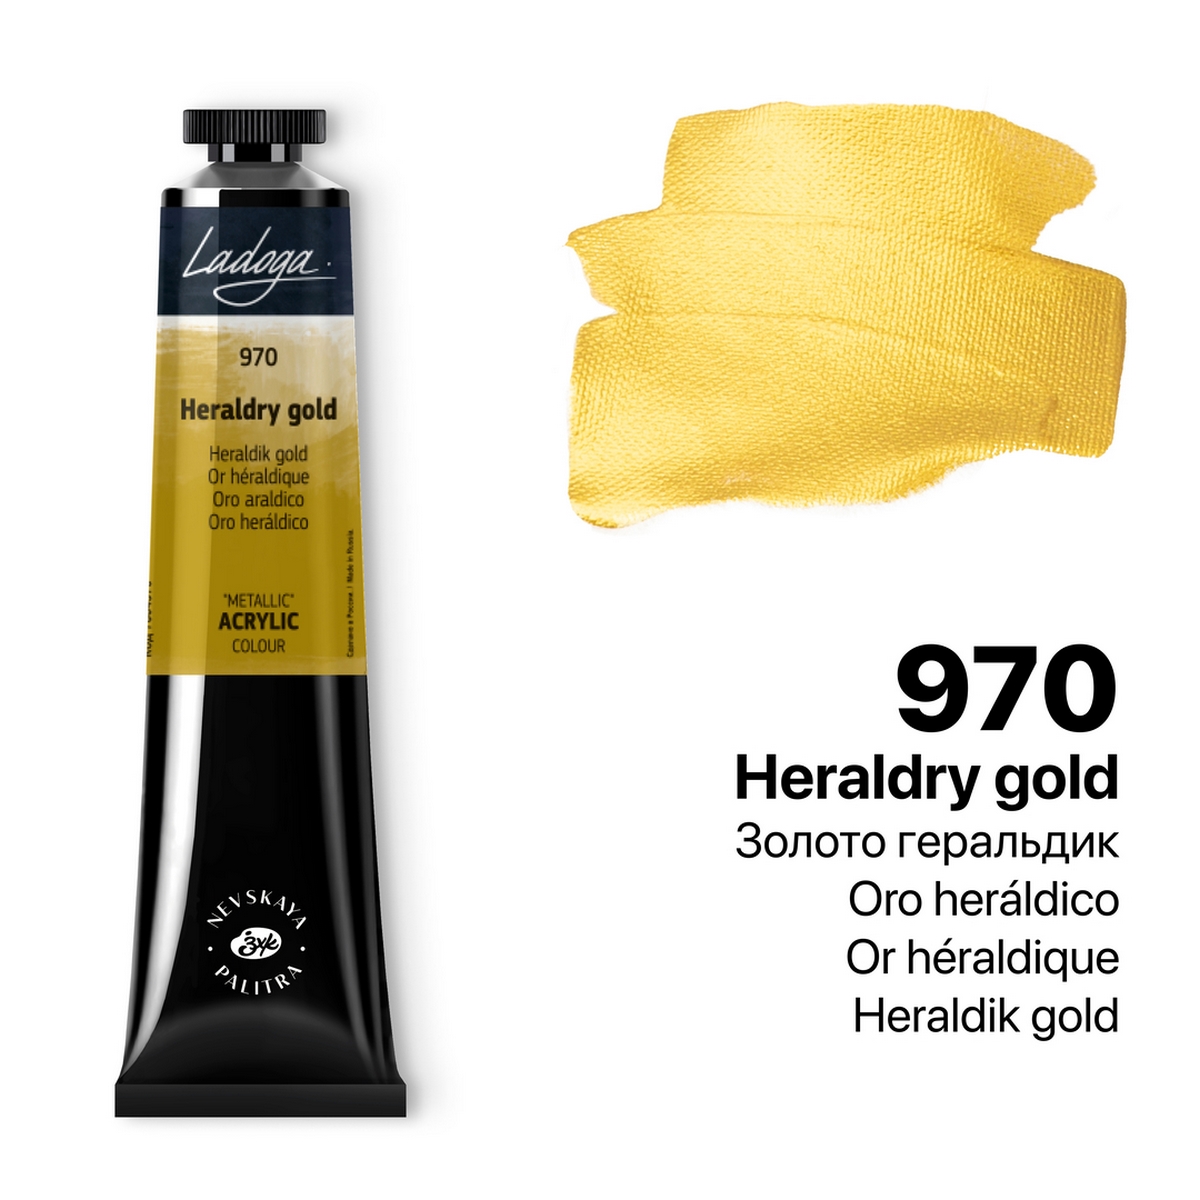 Acrylic colour Ladoga, Heraldry Gold Metallic, № 970